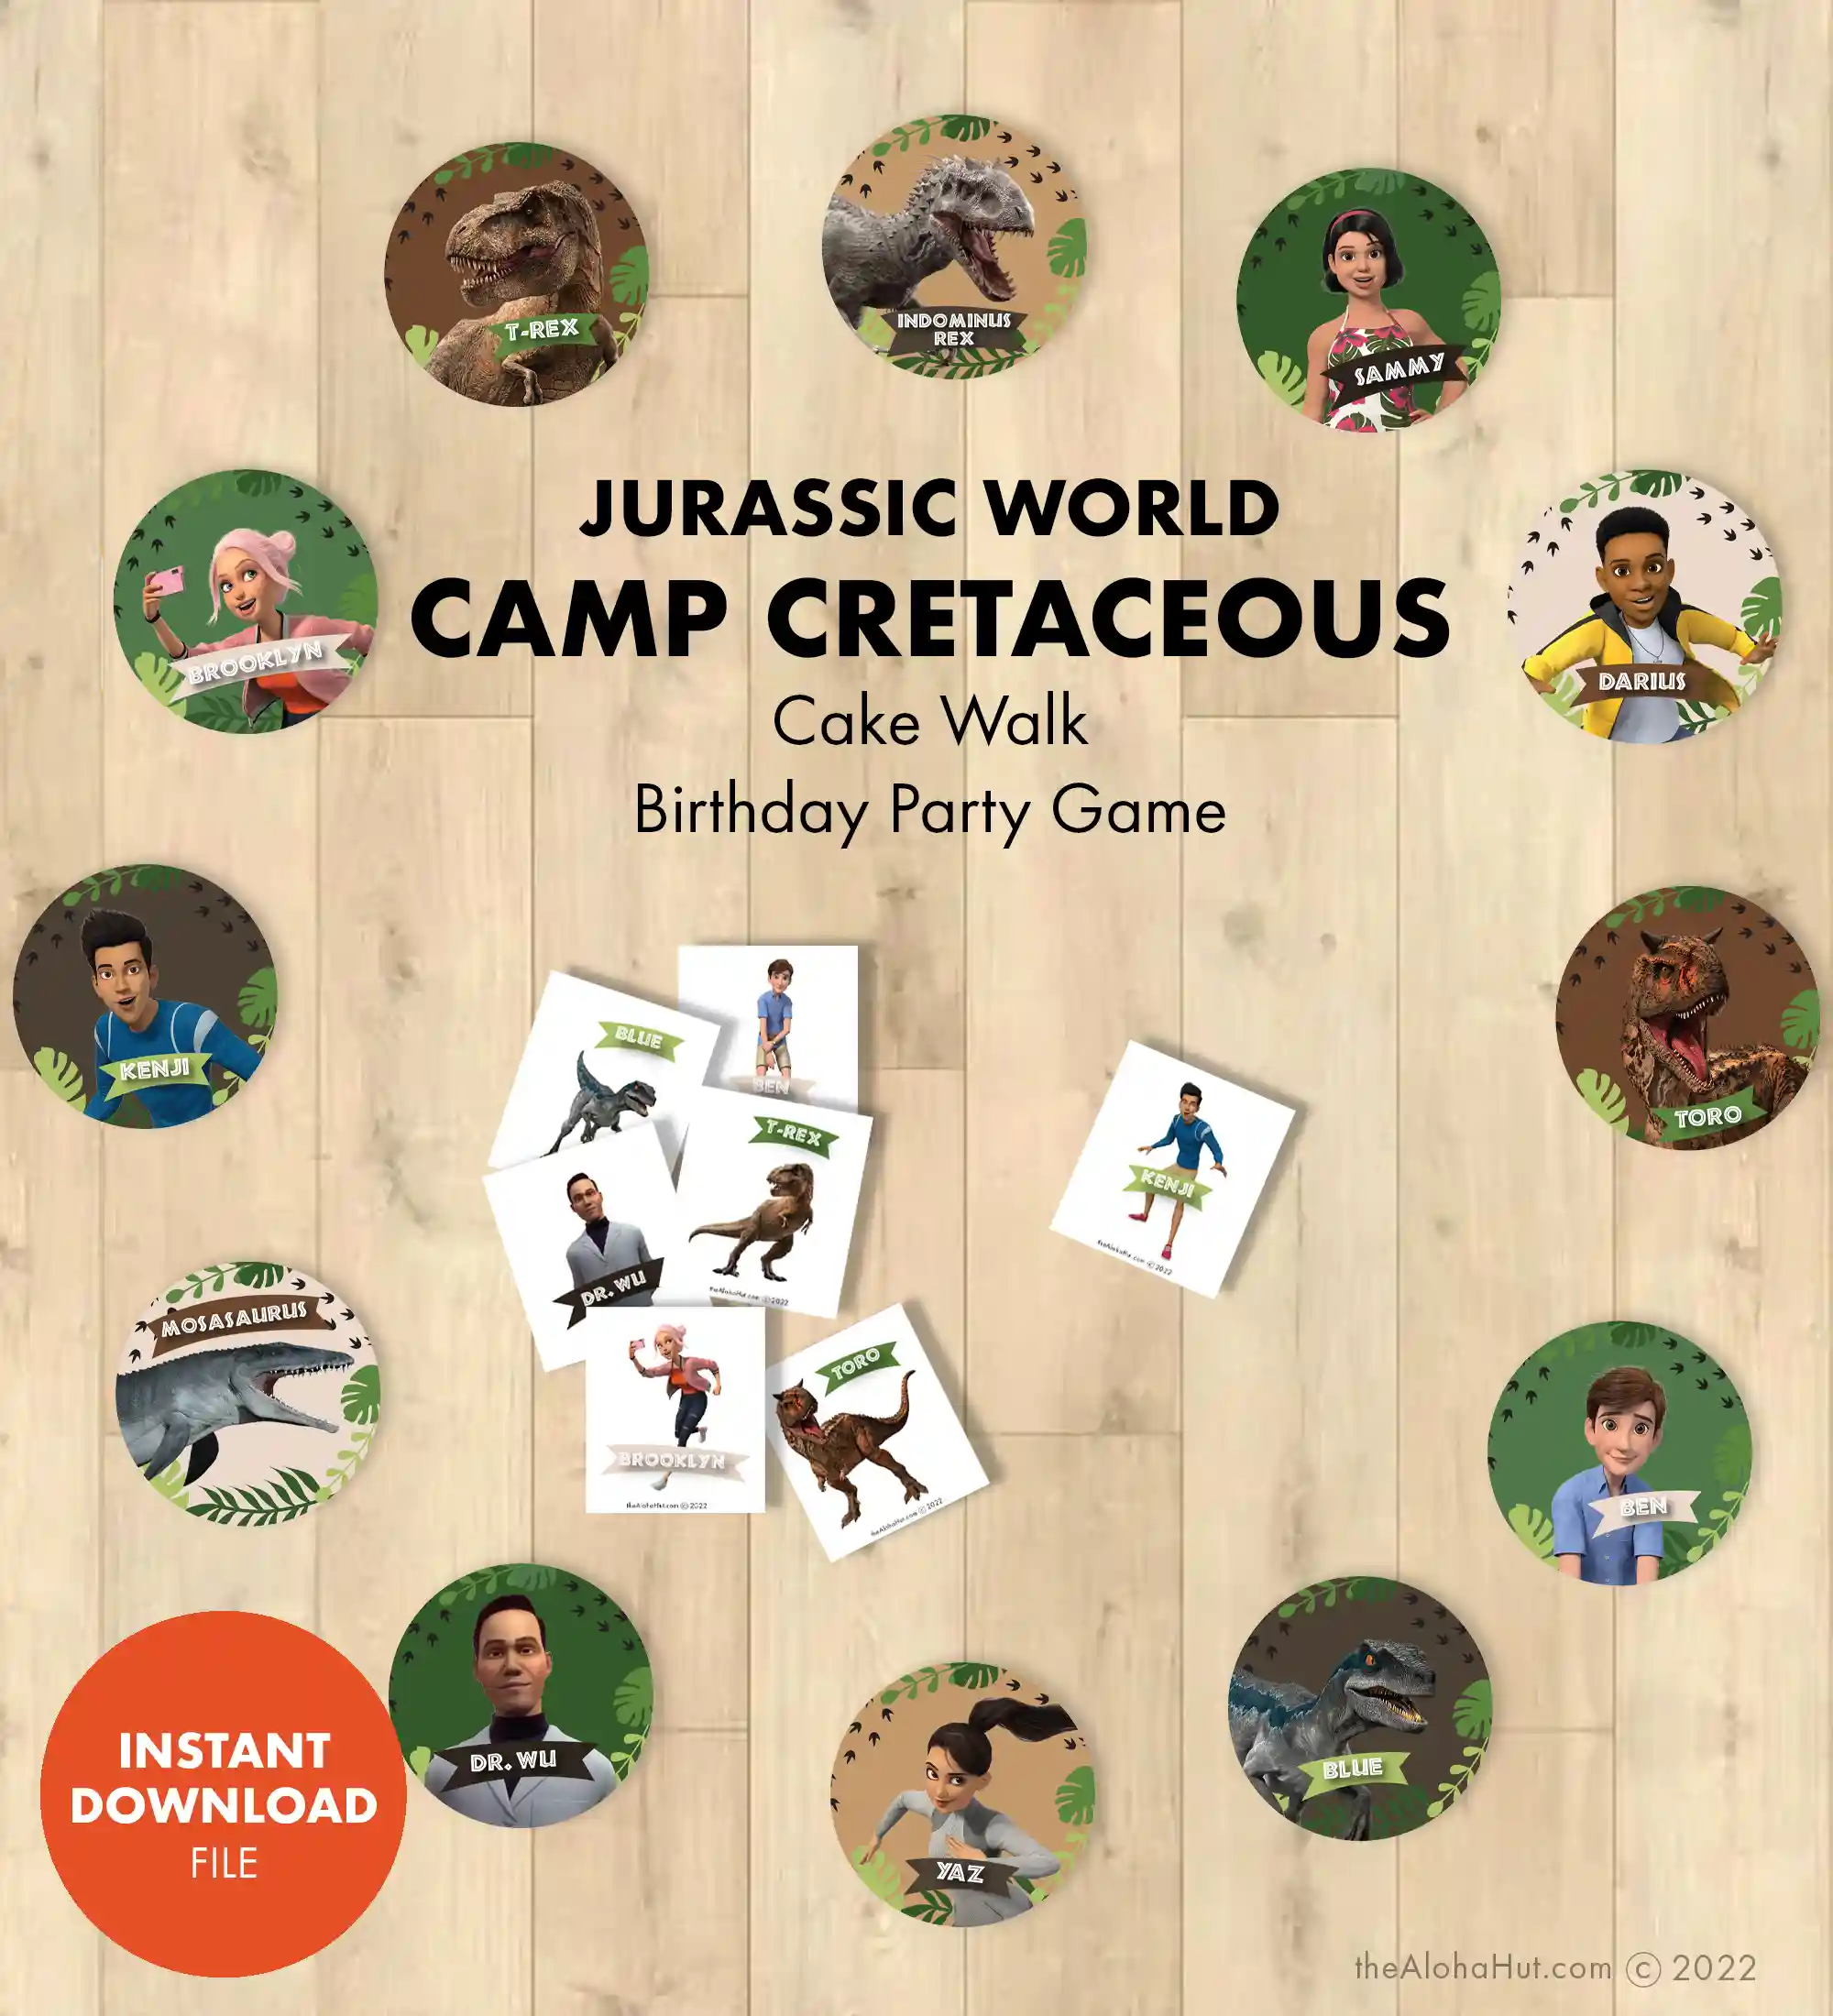 Jurassic World Camp Cretaceous Party Ideas - Dinosaur Party Ideas - free printable party decor & games - cake walk